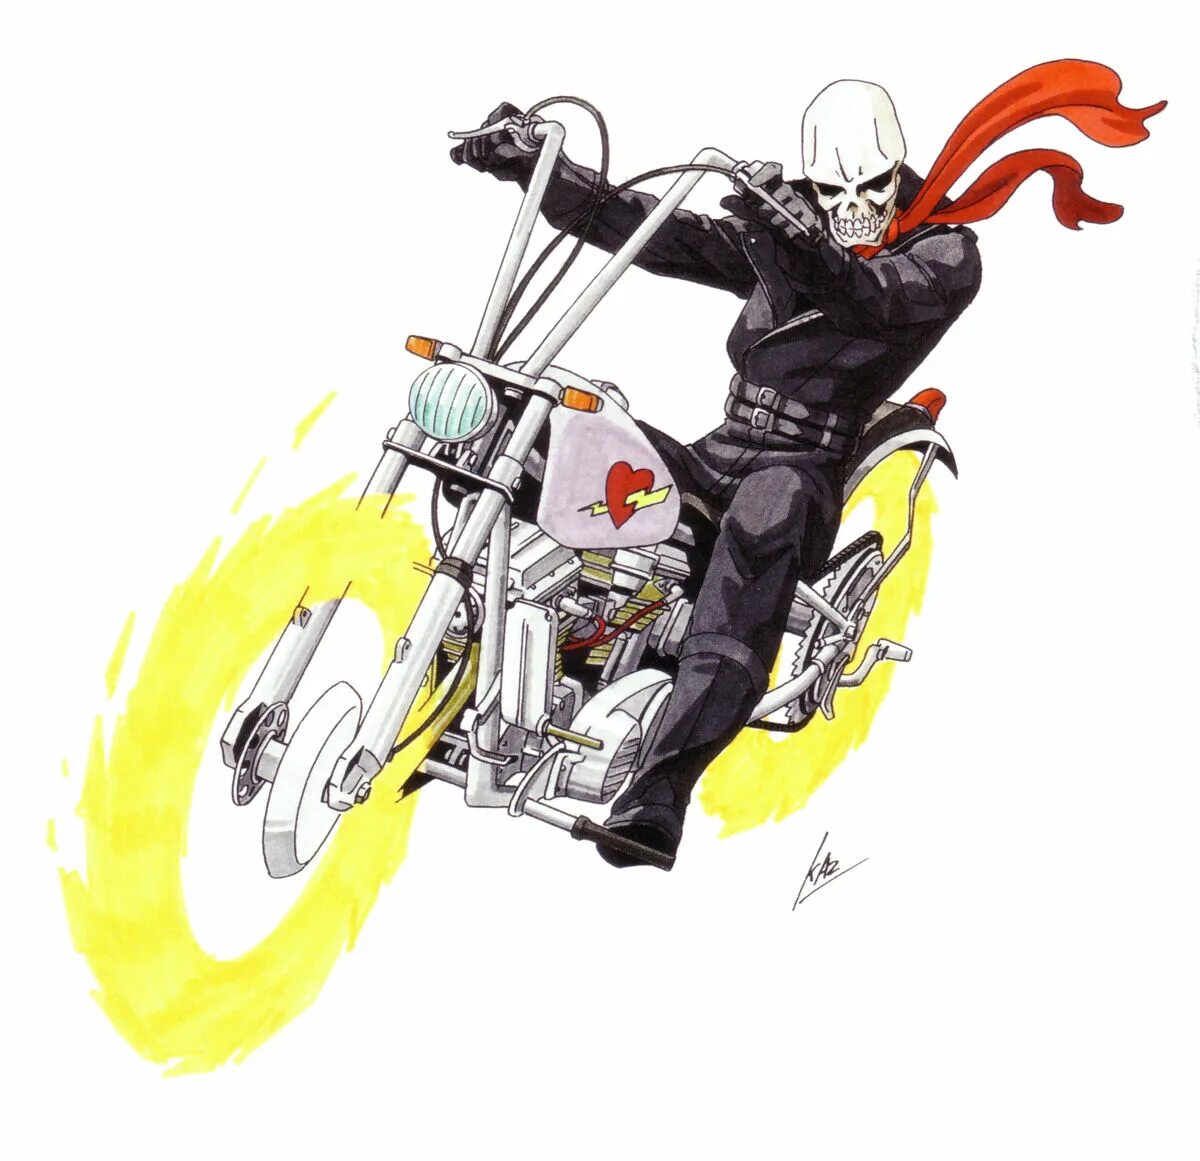 Bike of hell. Байкер. Мотоциклист арт. Байкер персонаж. Байкер Призрачный гонщик.